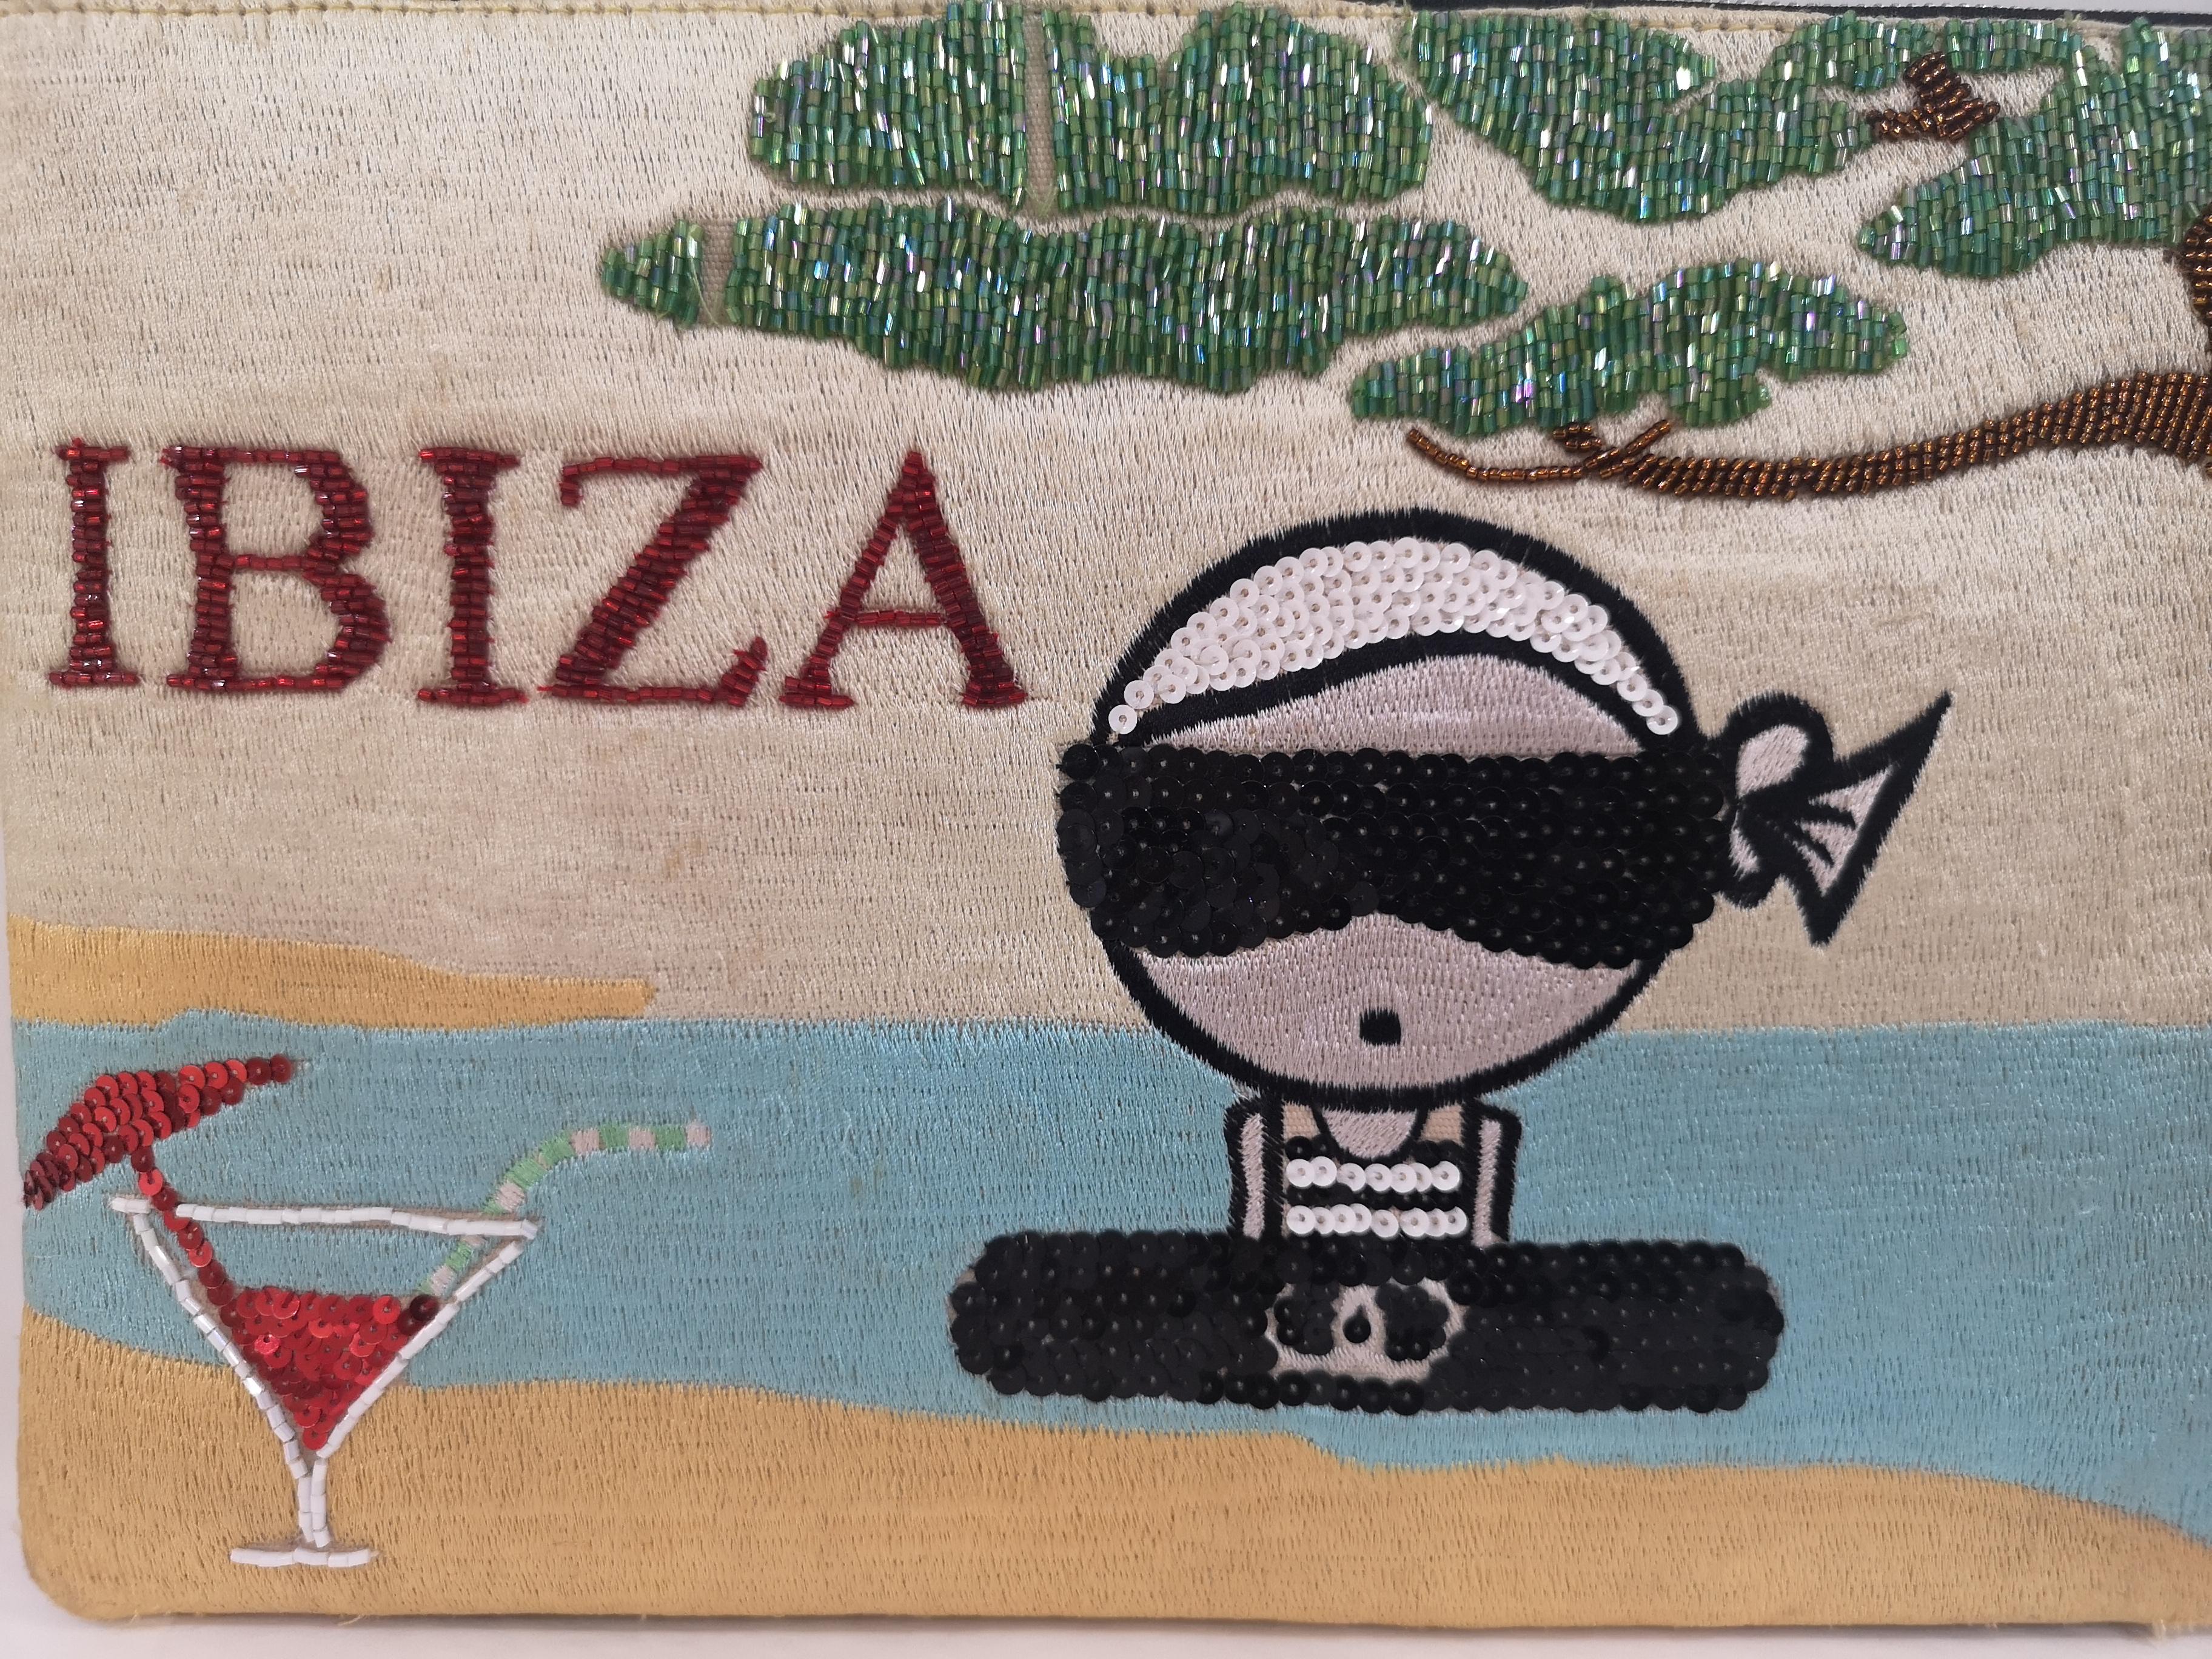 House of muamua Karl in Ibiza zip pochette
24 * 36 cm